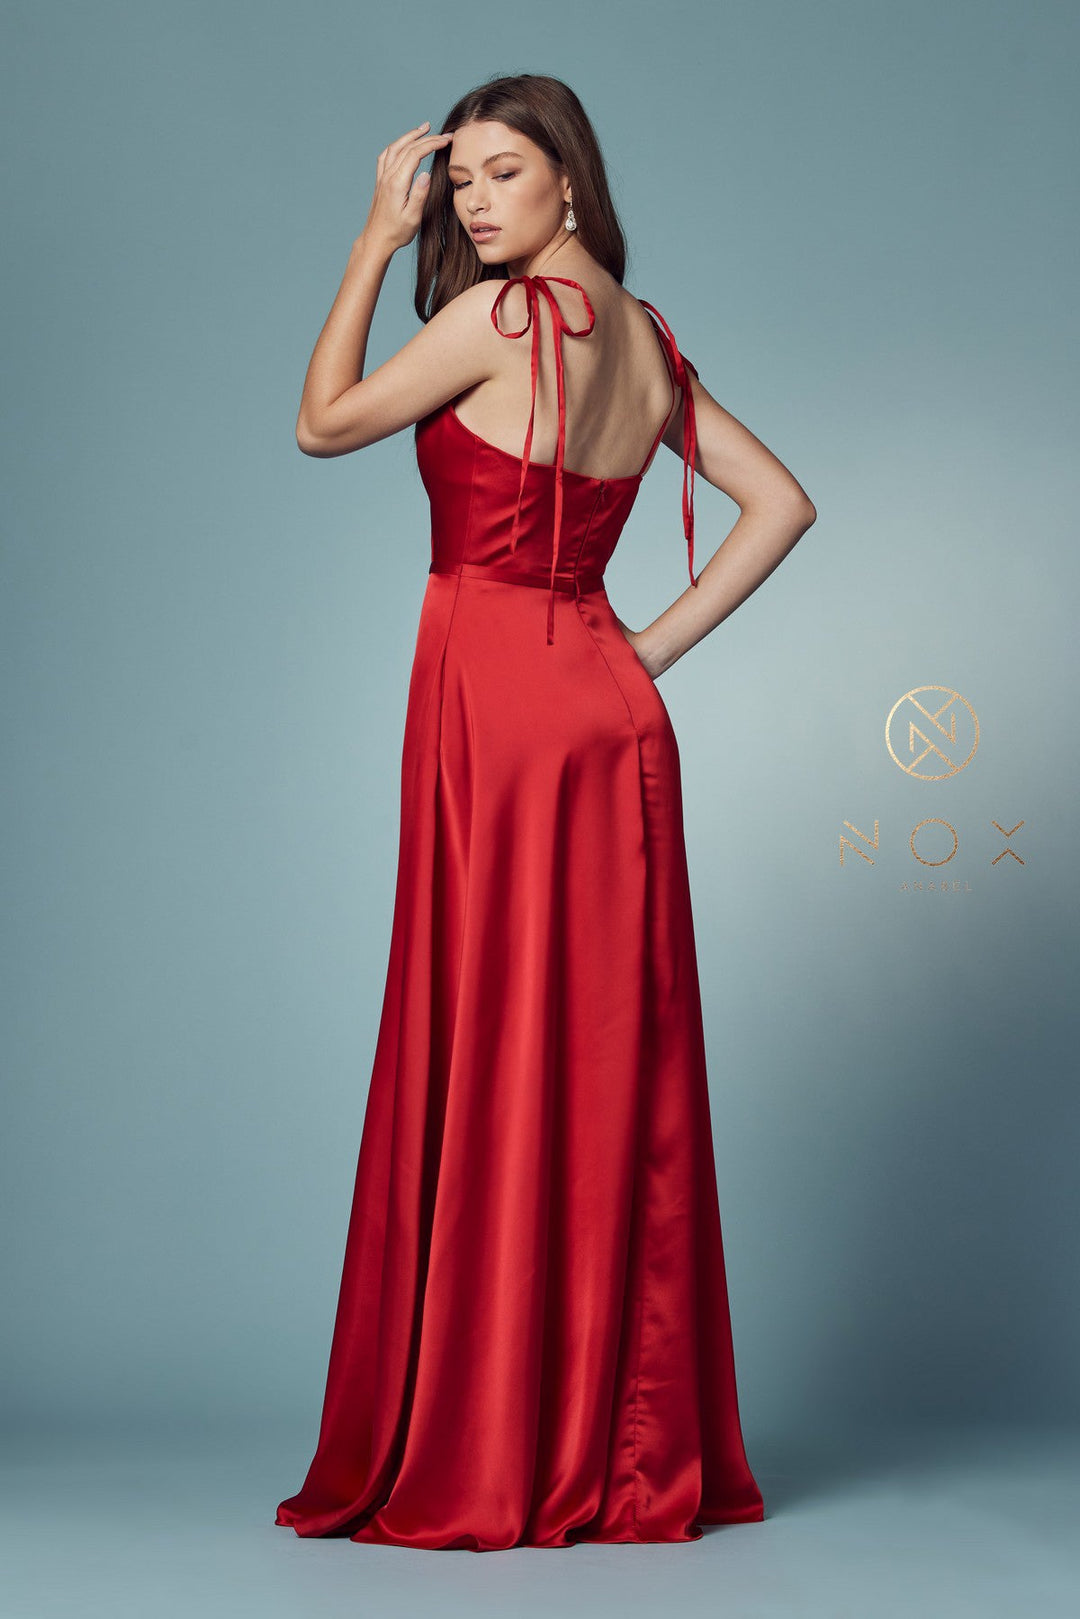 Long Satin V-Neck Dress by Nox Anabel R1029